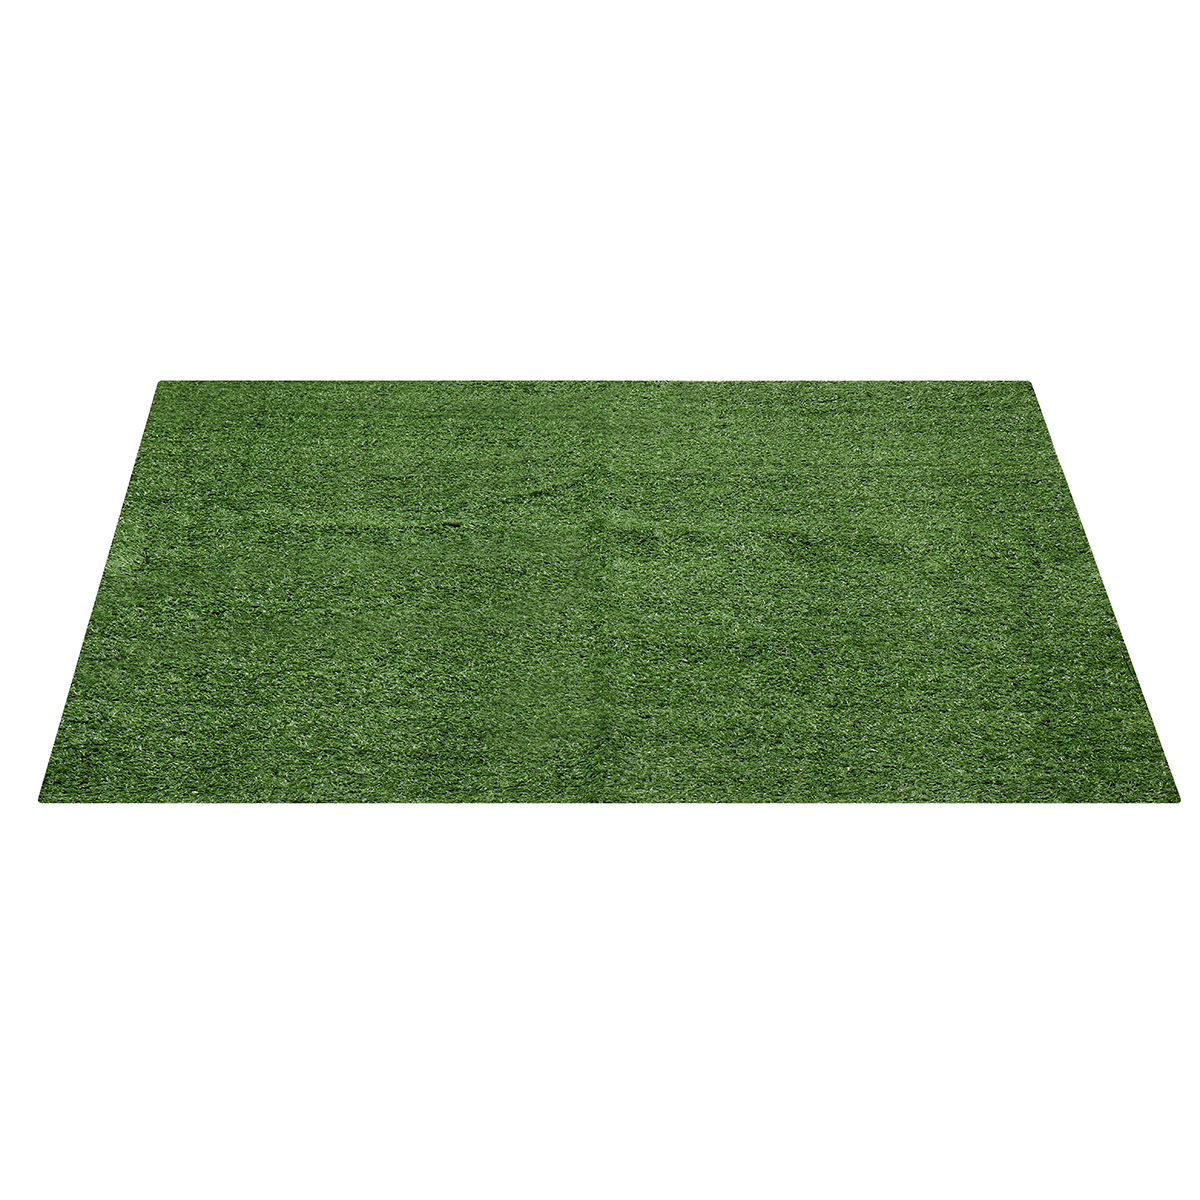 Artificial-Synthetic-Lawn-Turf-Plastic-Green-Plant-Grass-Garden-Decor-1694876-3